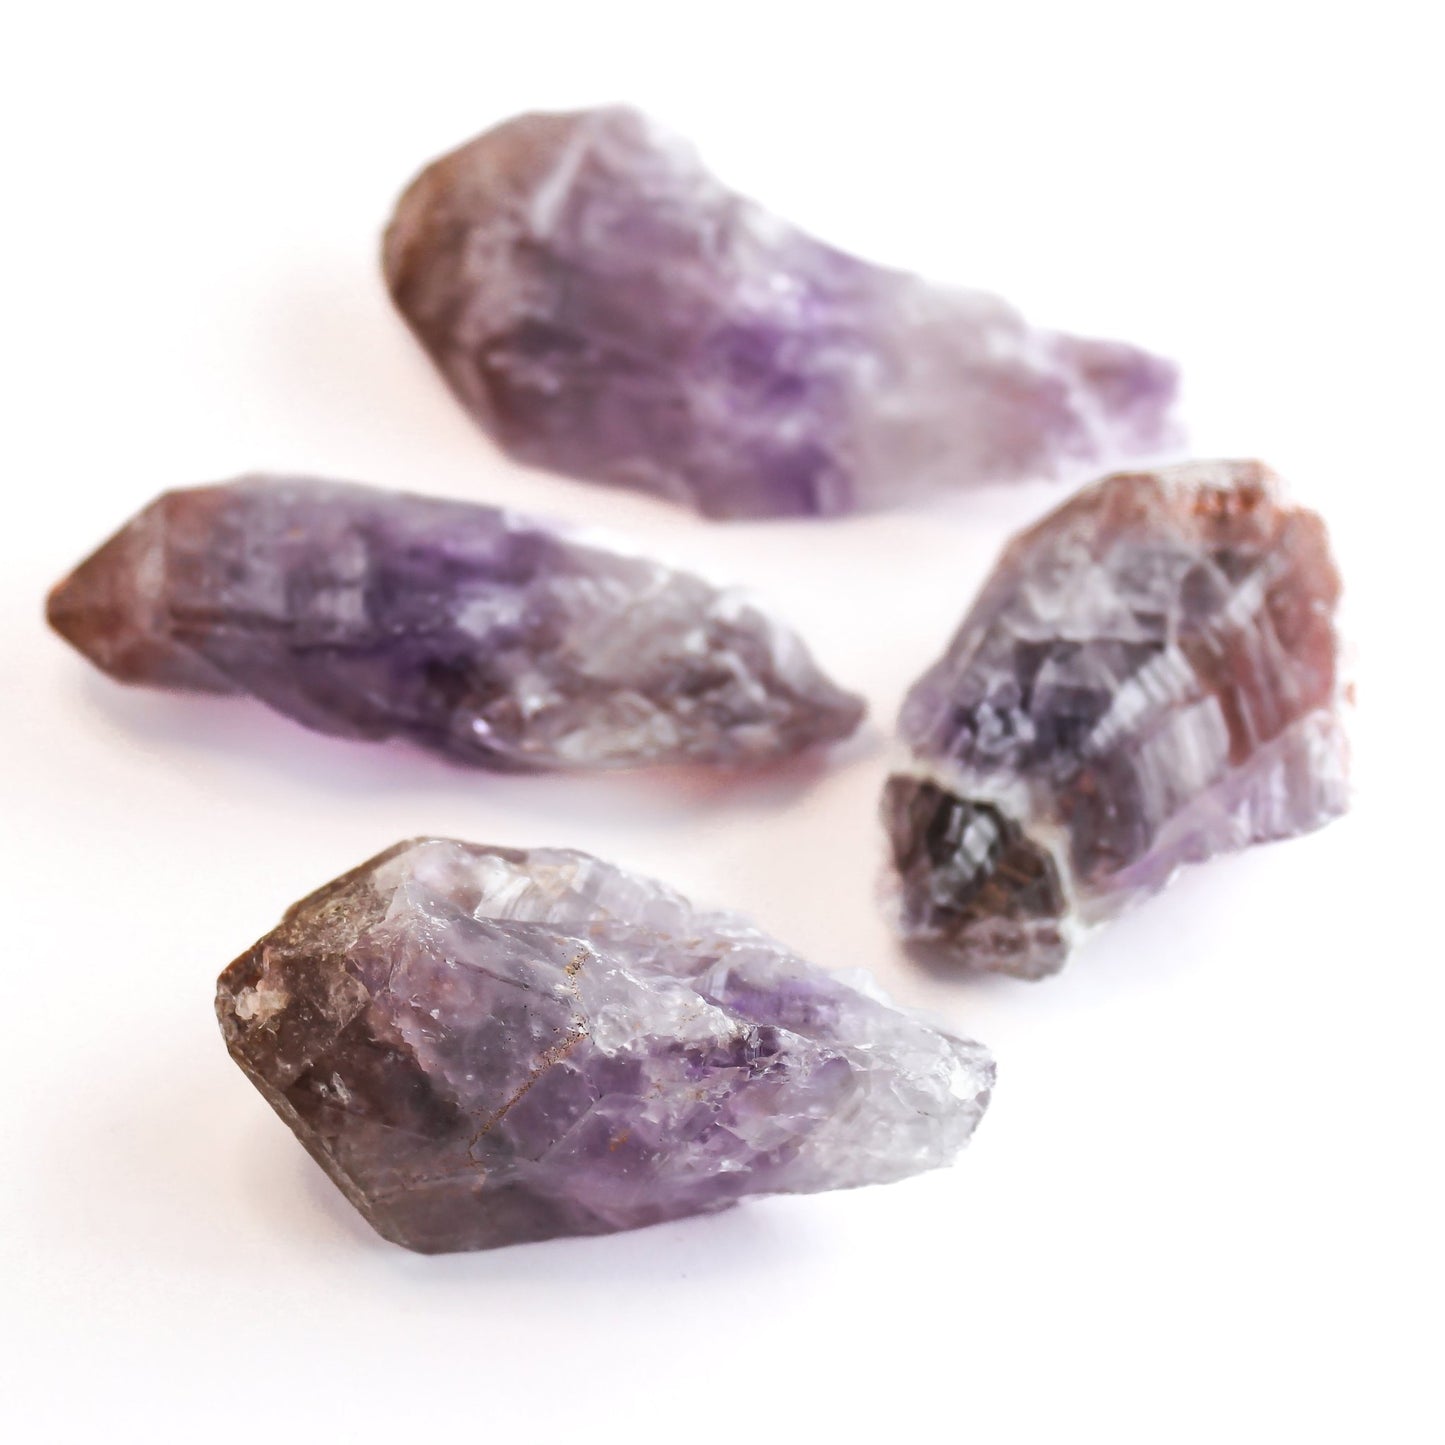 Super Seven Raw - Conscious Crystals New Zealand Crystal and Spiritual Shop